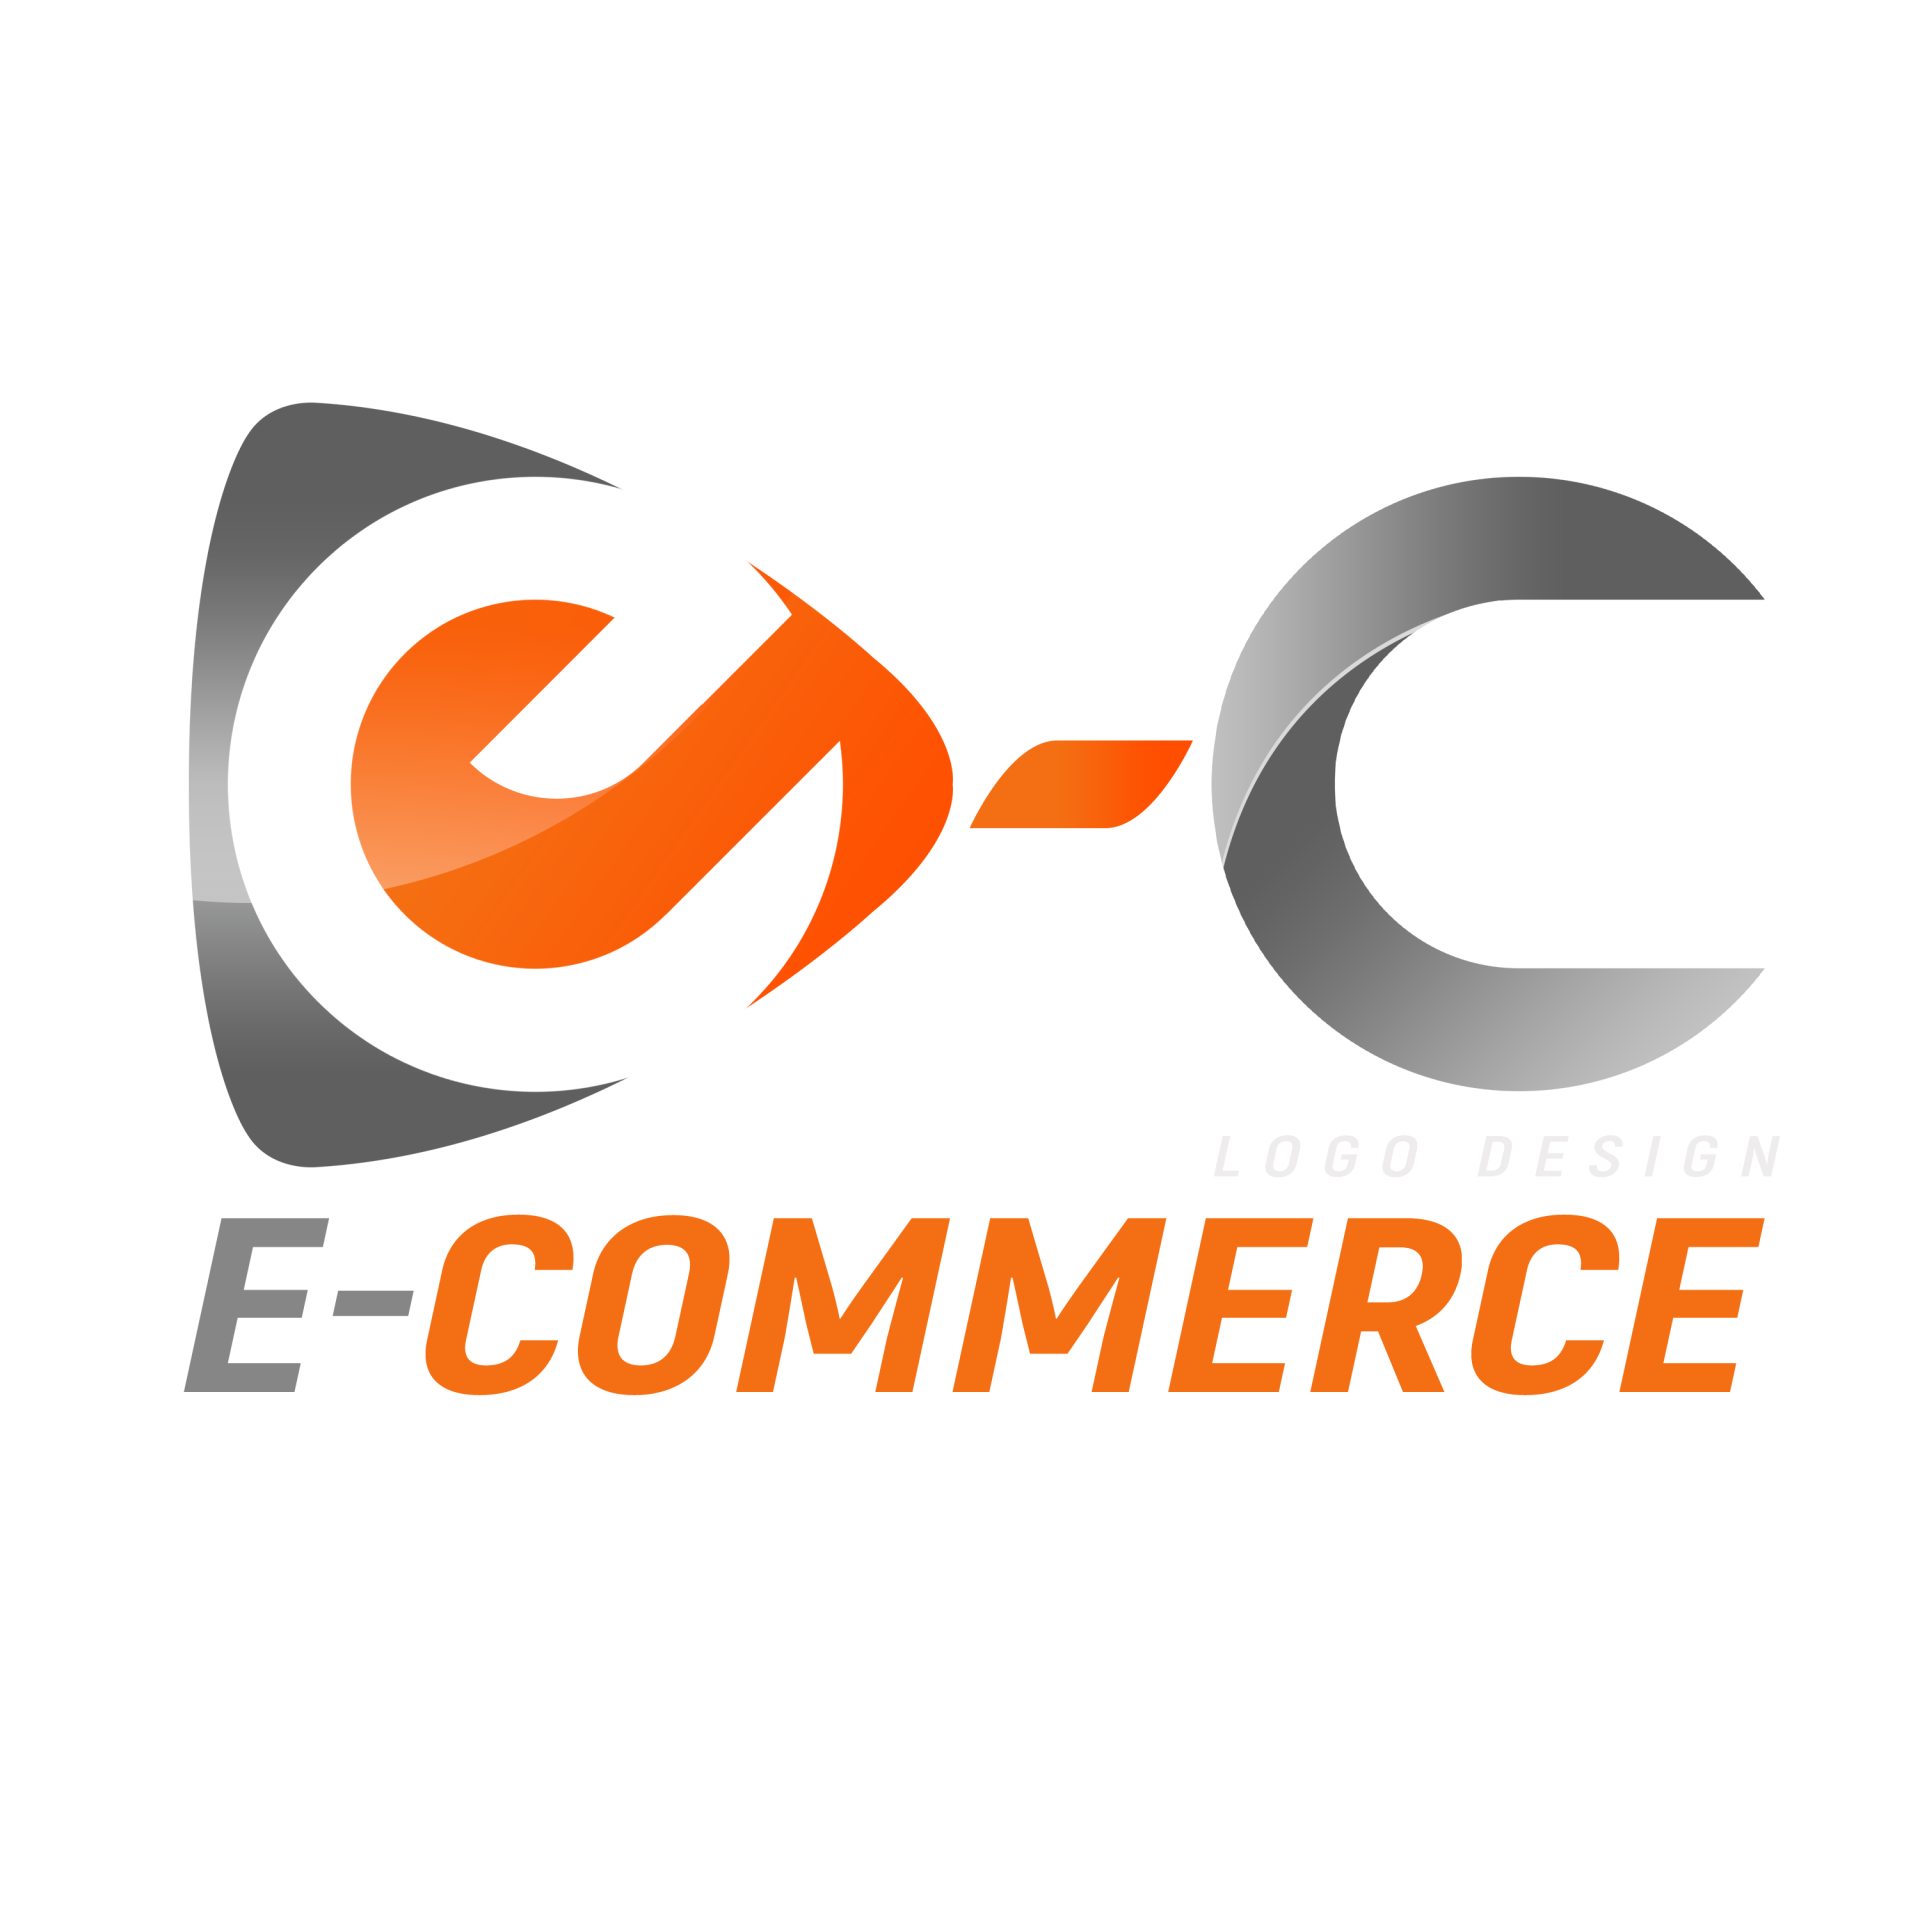 ecommerce logo ideas 4